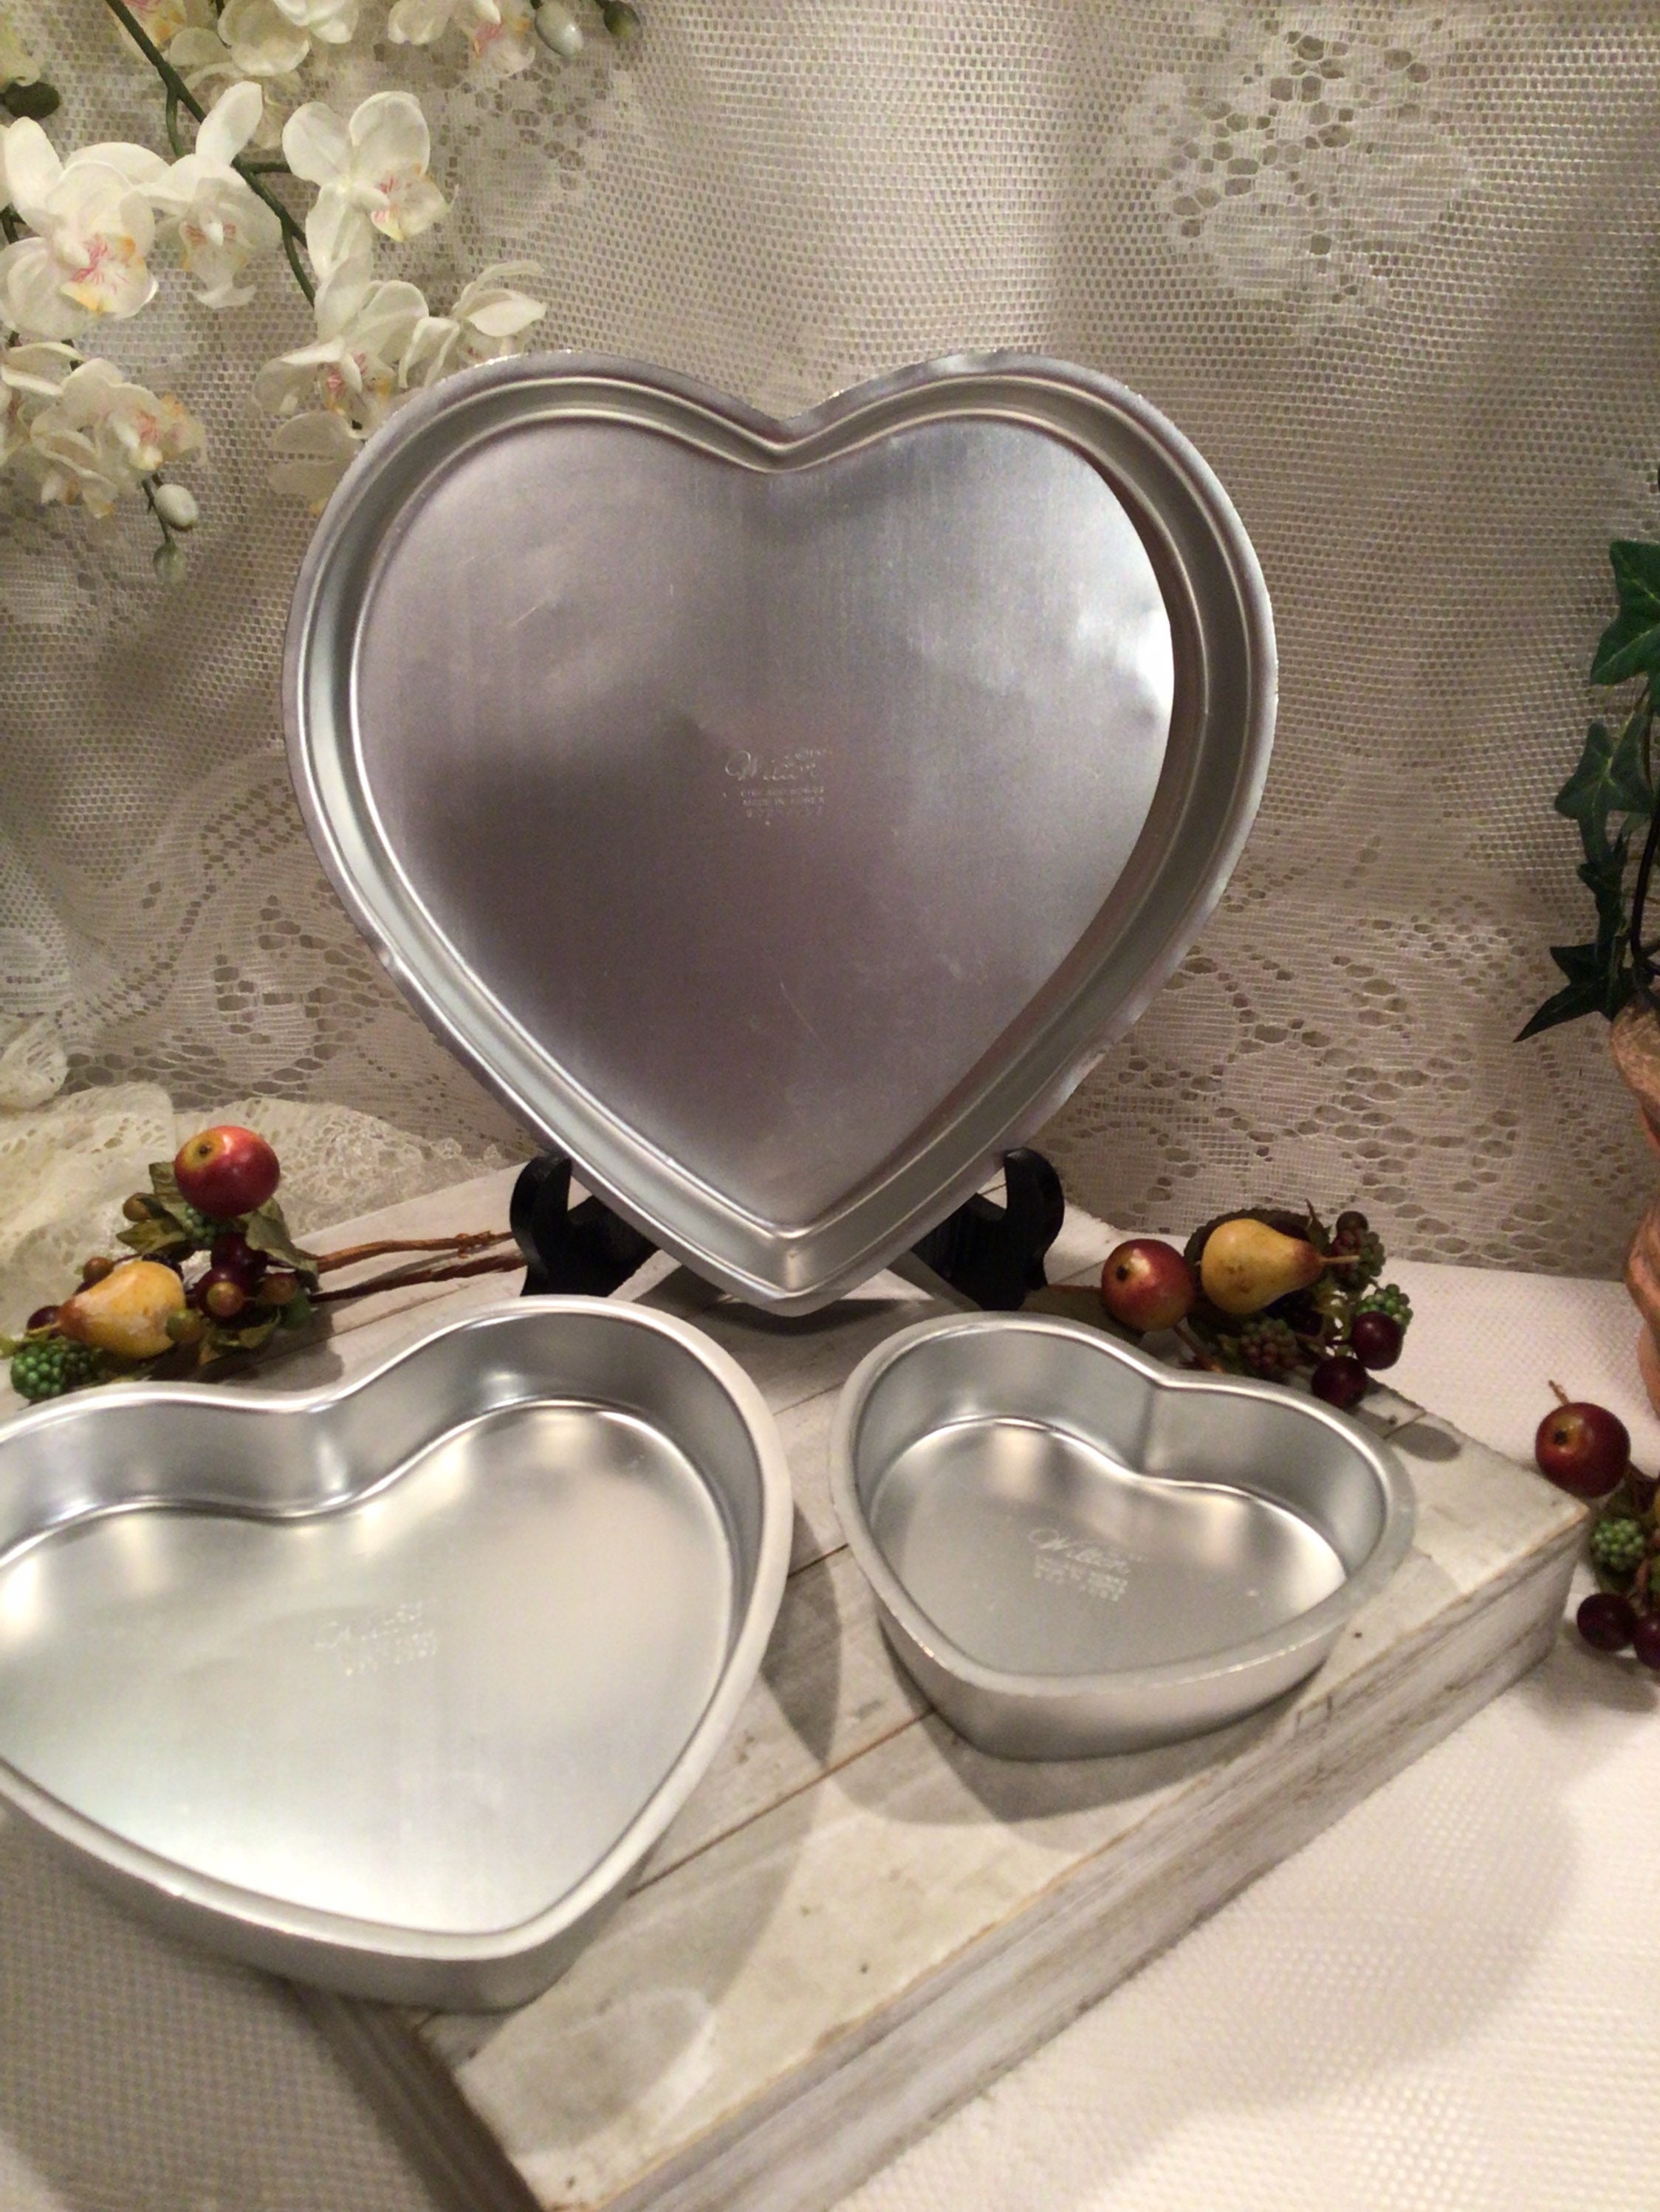 HOMSFOU 2pcs Heart Cake Mold Baking Heart Shaped Tart Pan Pullman